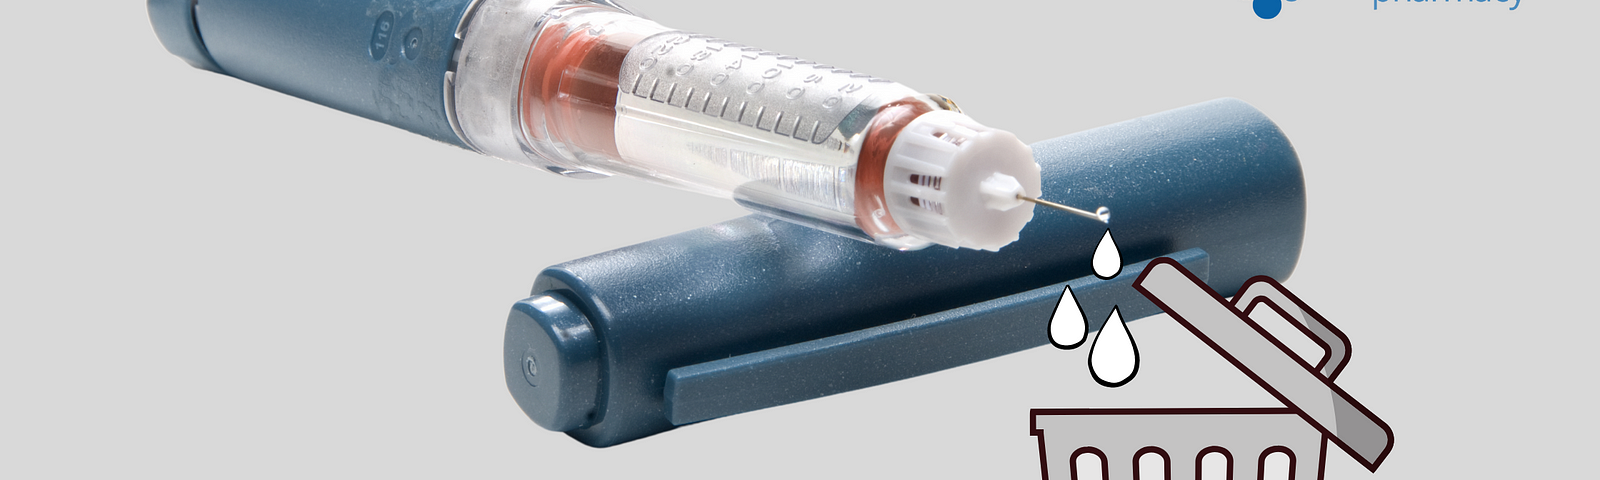 Why proper insulin use makes insulin even more expensive